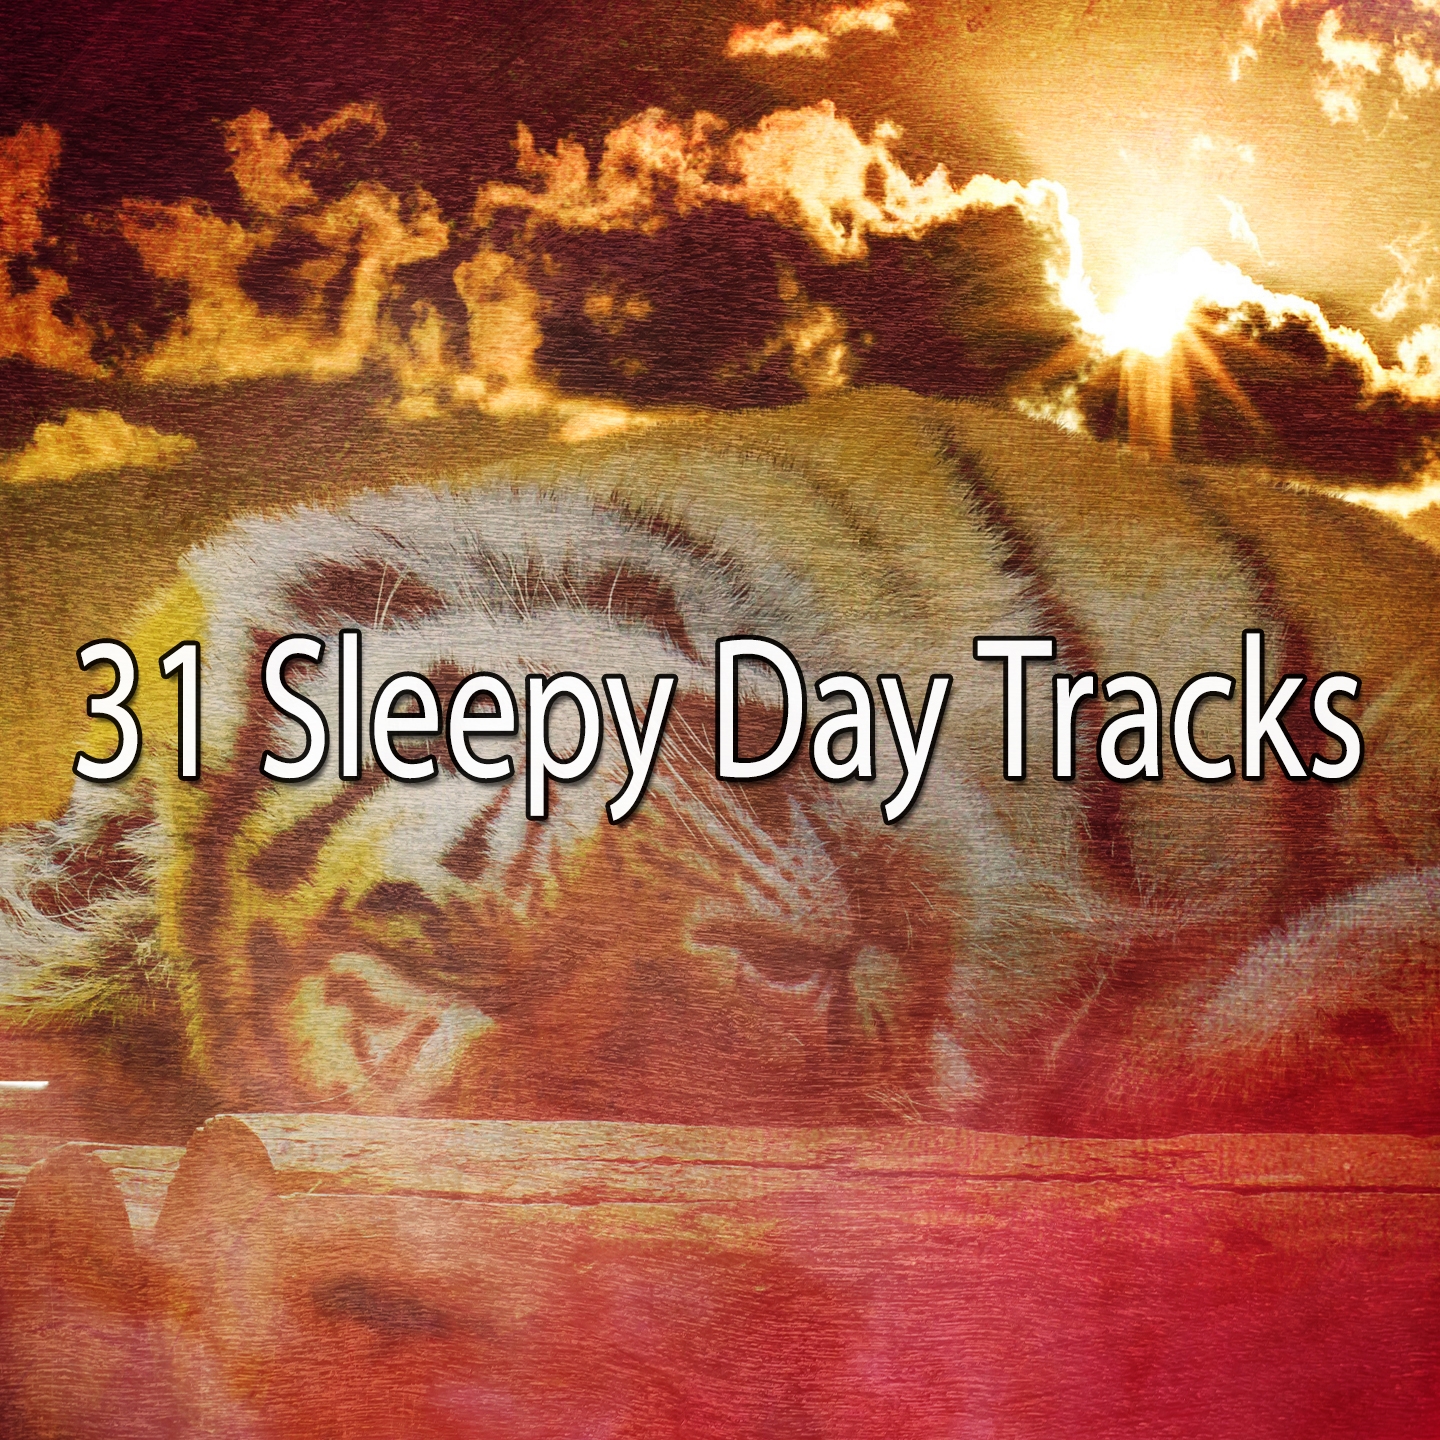 31 Sleepy Day Tracks